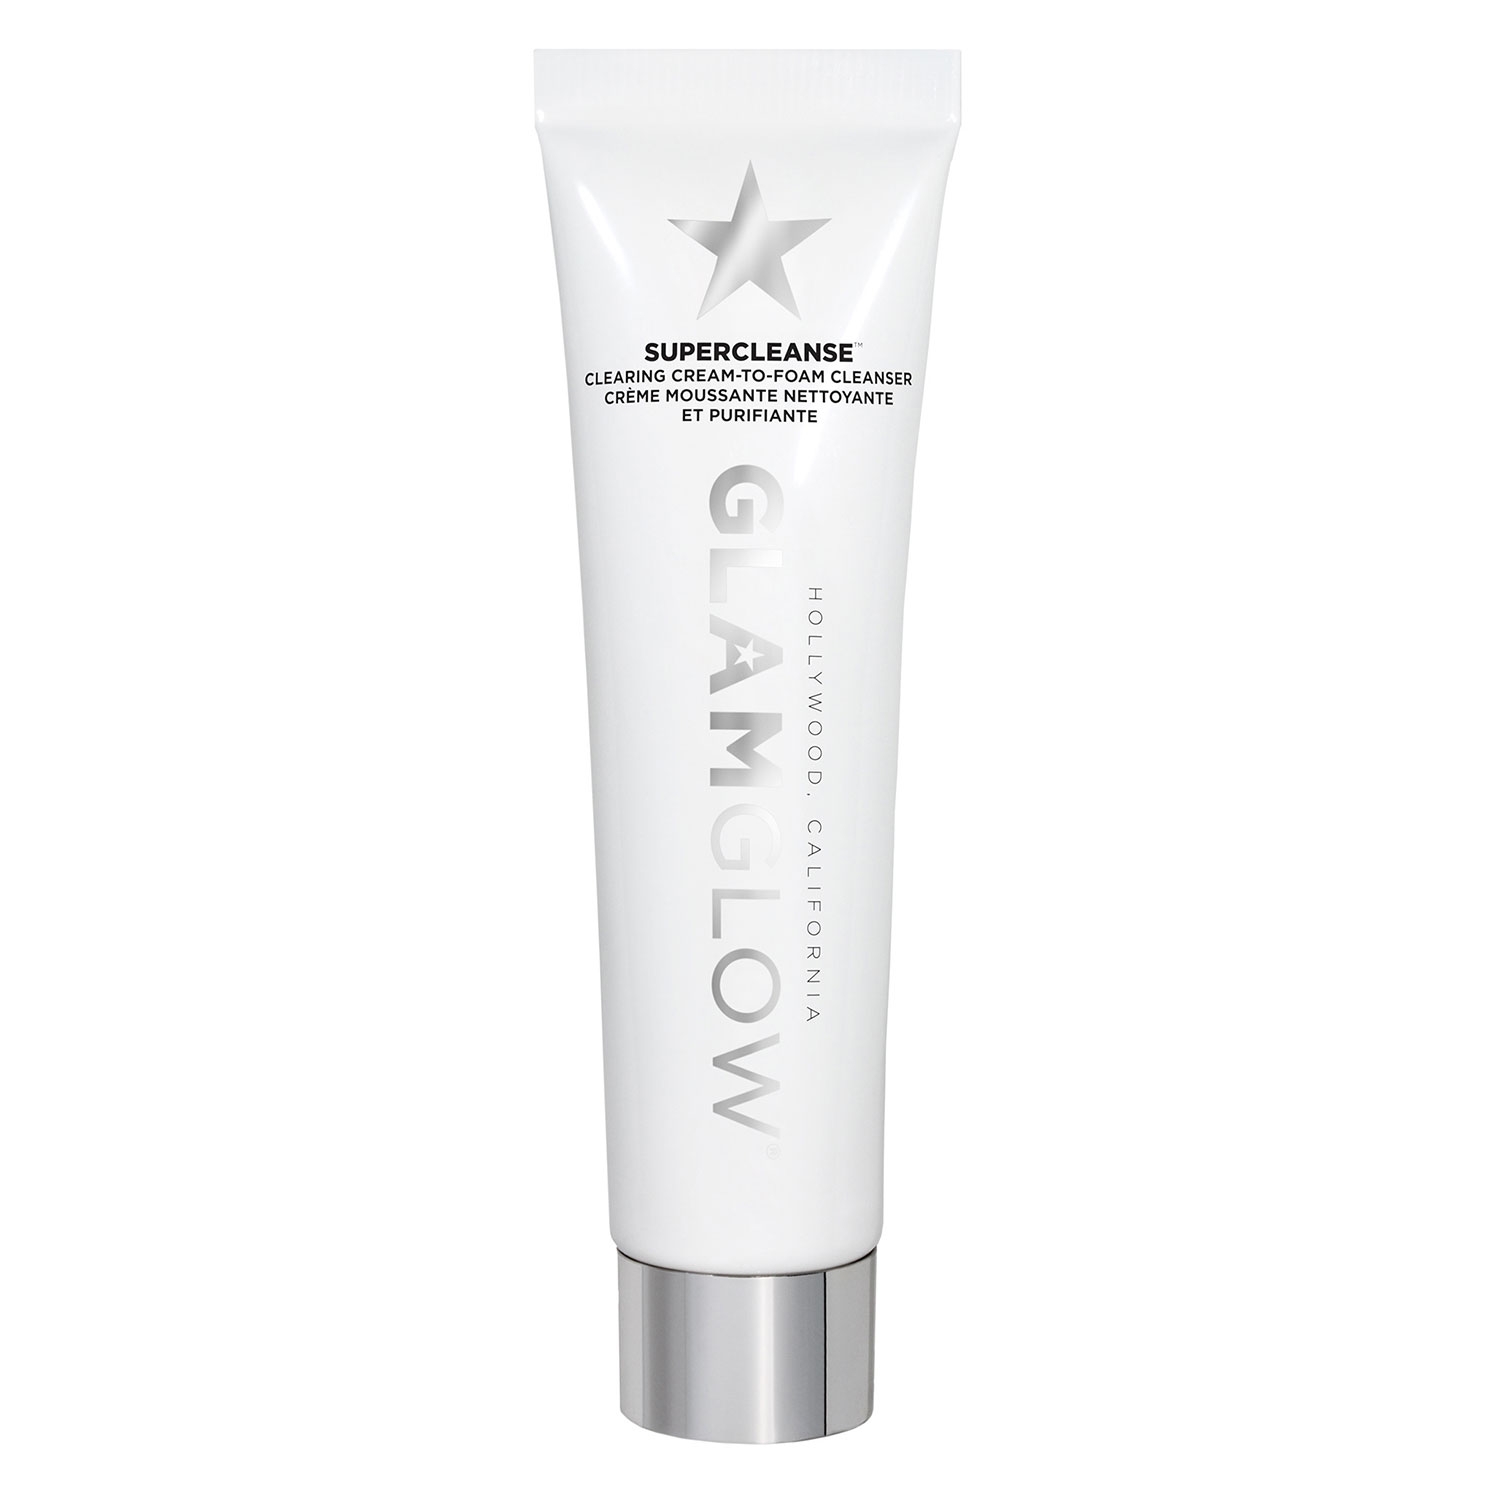 Produktbild von GlamGlow Skincare - SUPERCLEANSE Clearing Cream-to-Foam Cleanser